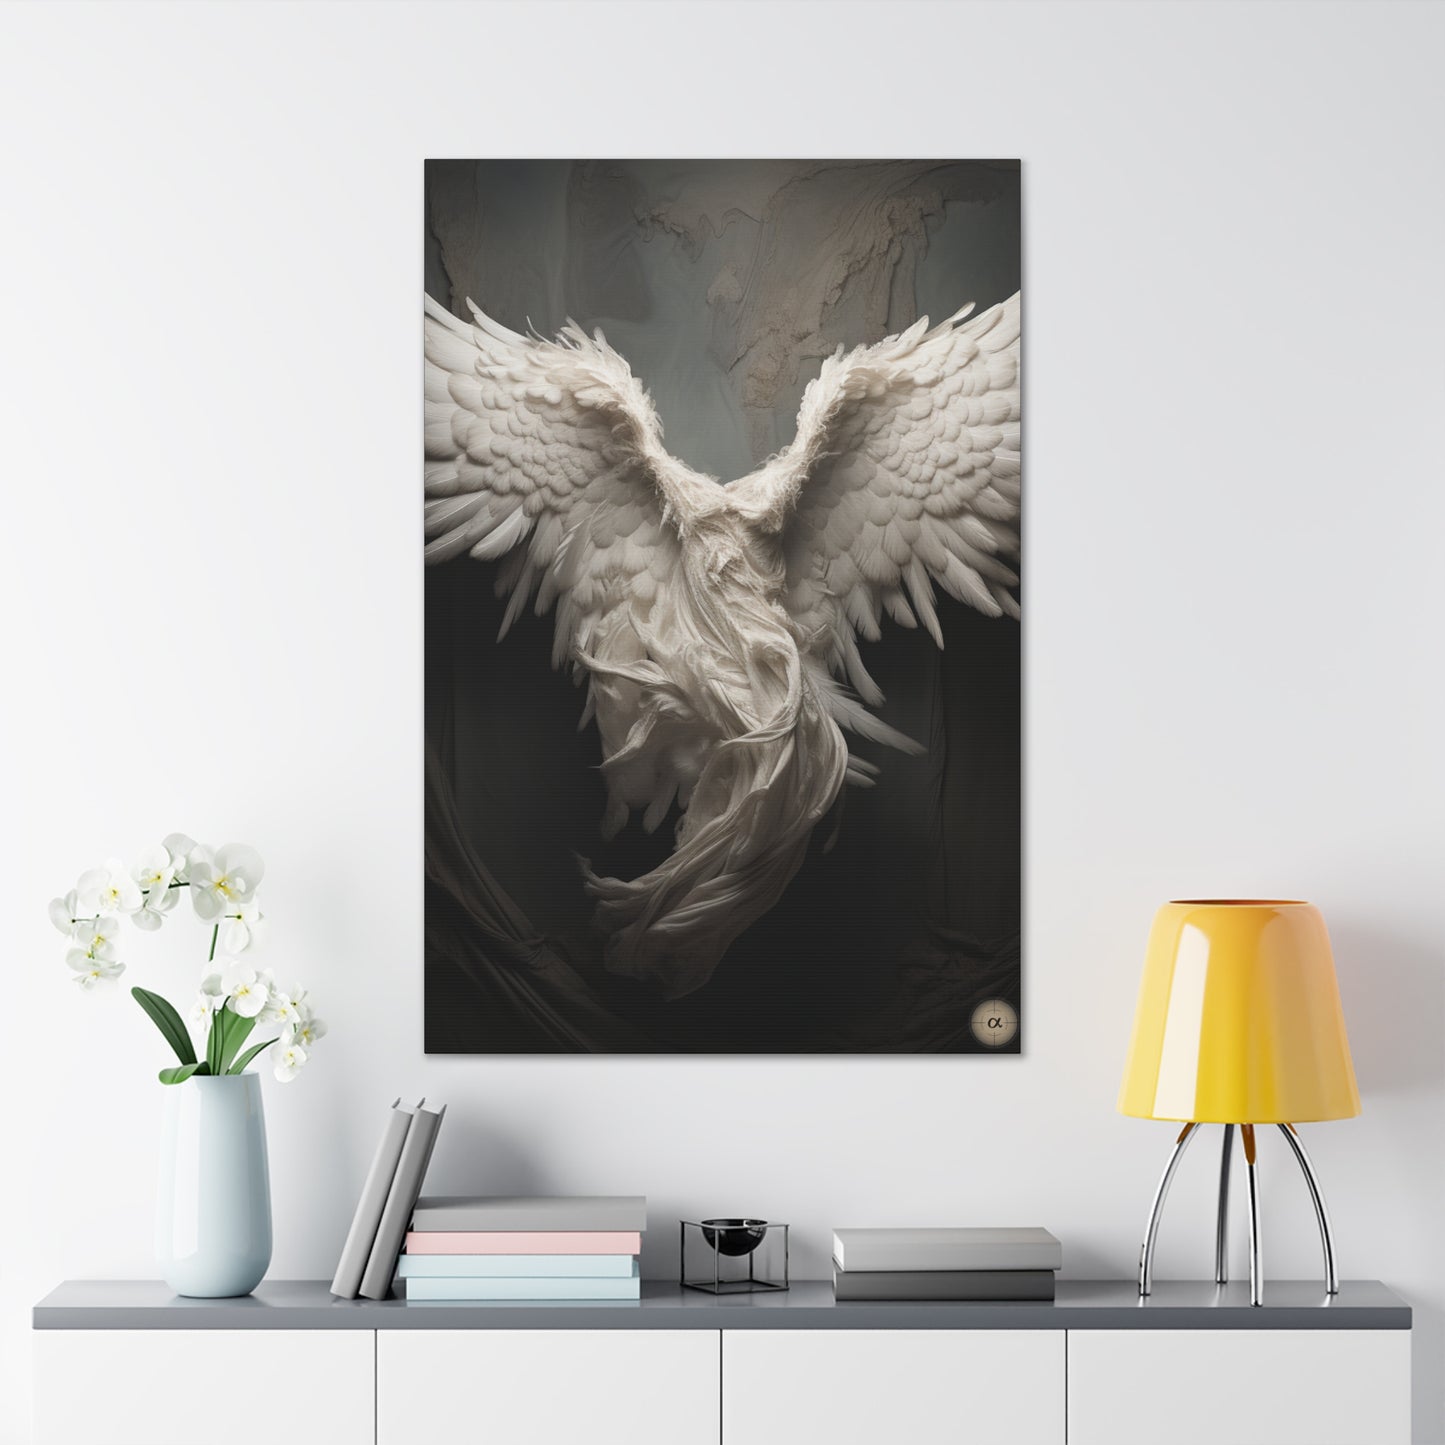 Art by Kendyll: "Angel Wings" on Canvas